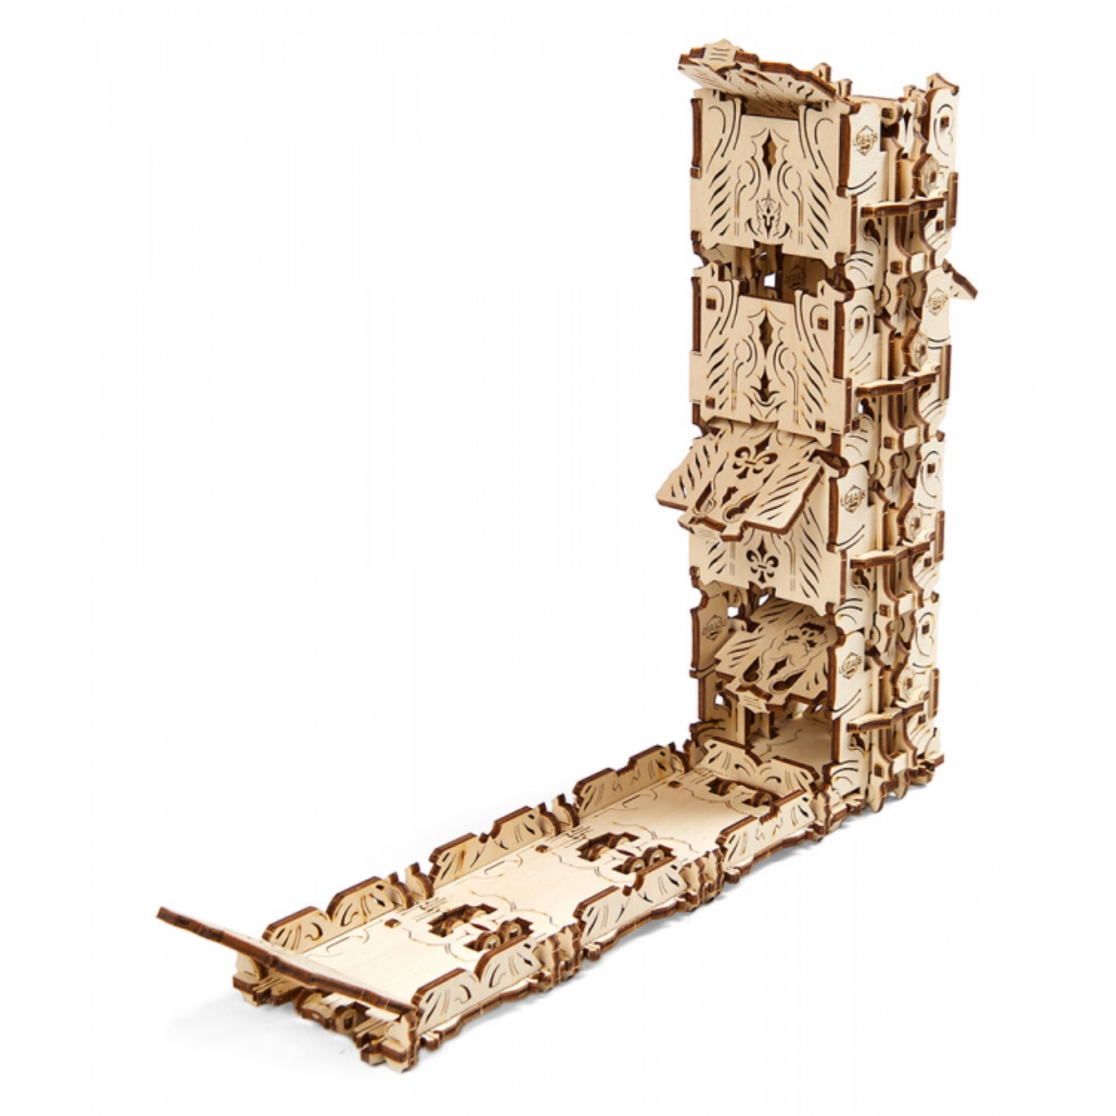 Modular Dice Tower - Byggsats i trä